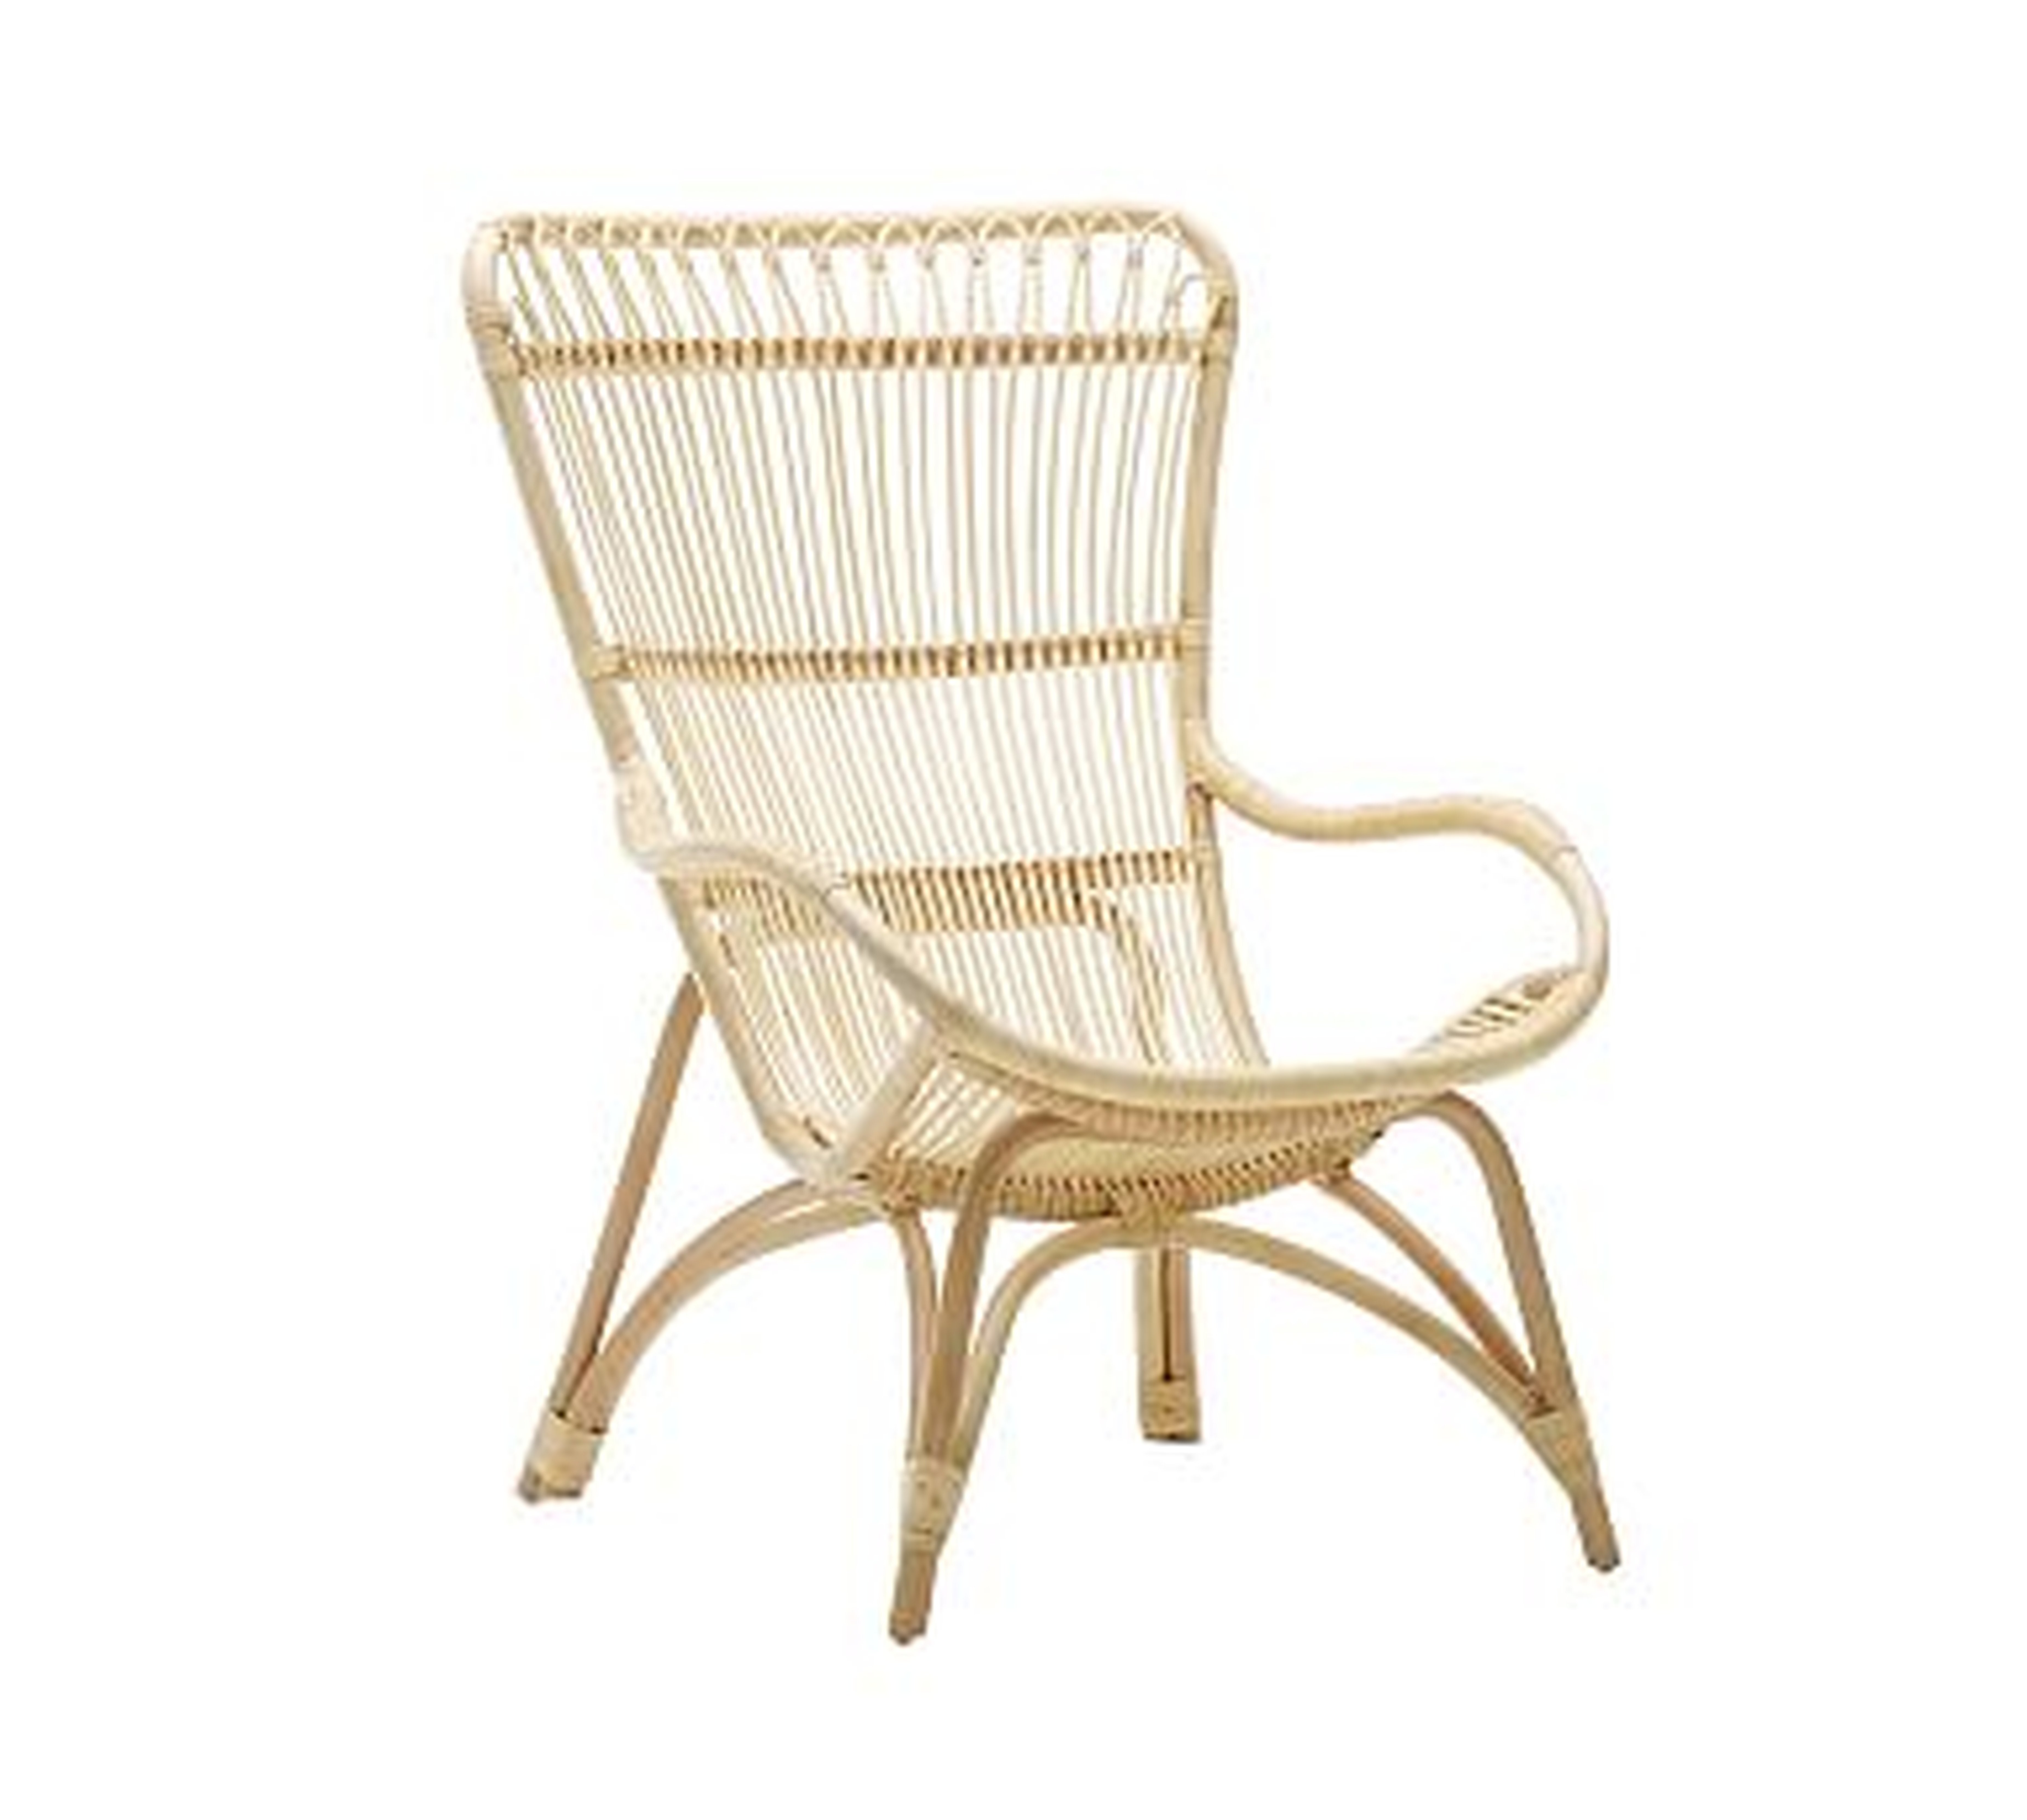 Sika Design Monet Rattan Chair, Natural - Pottery Barn